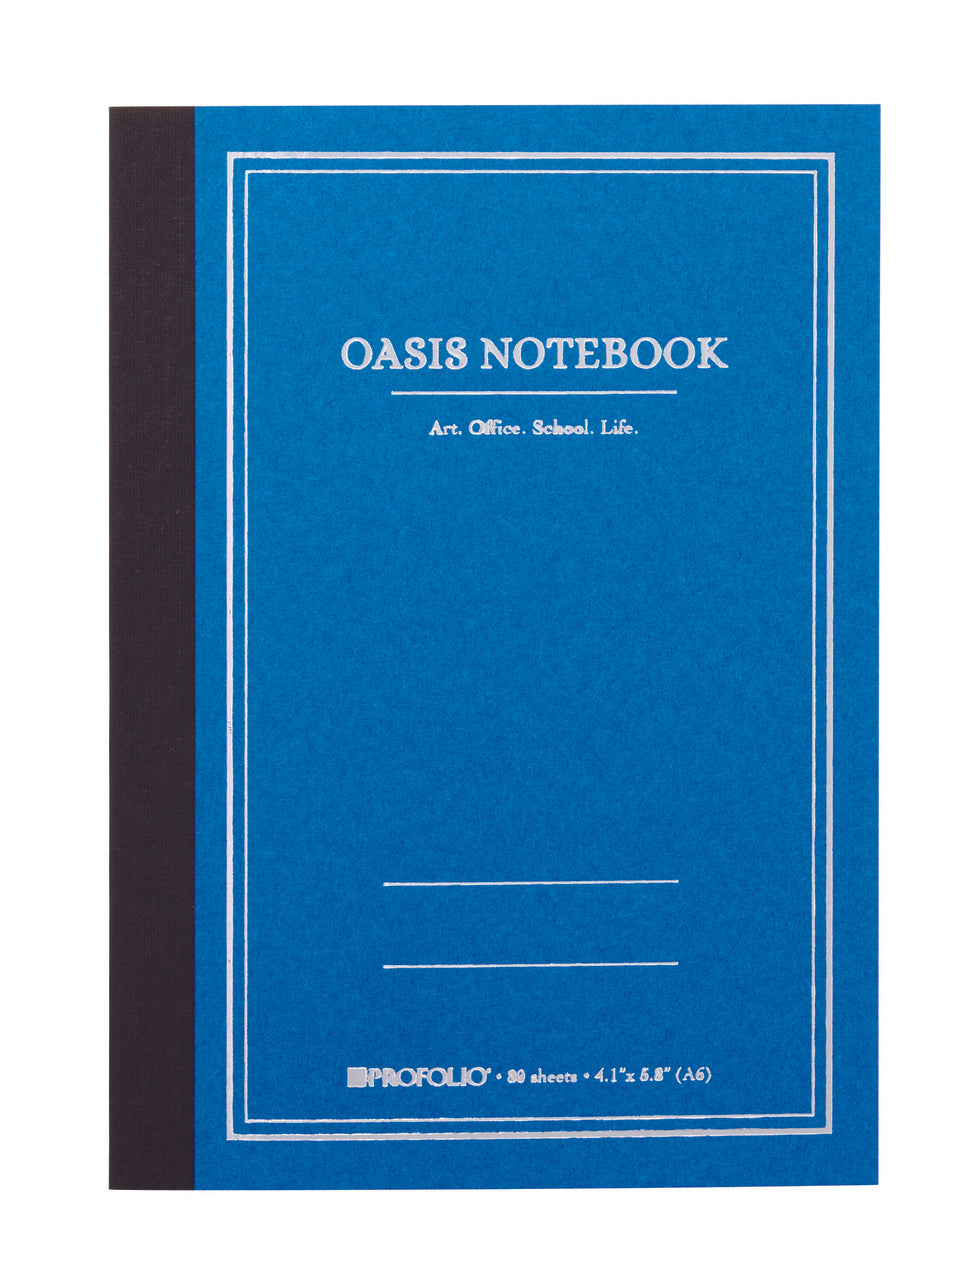 ProFolio Oasis Notebook in sky blue.